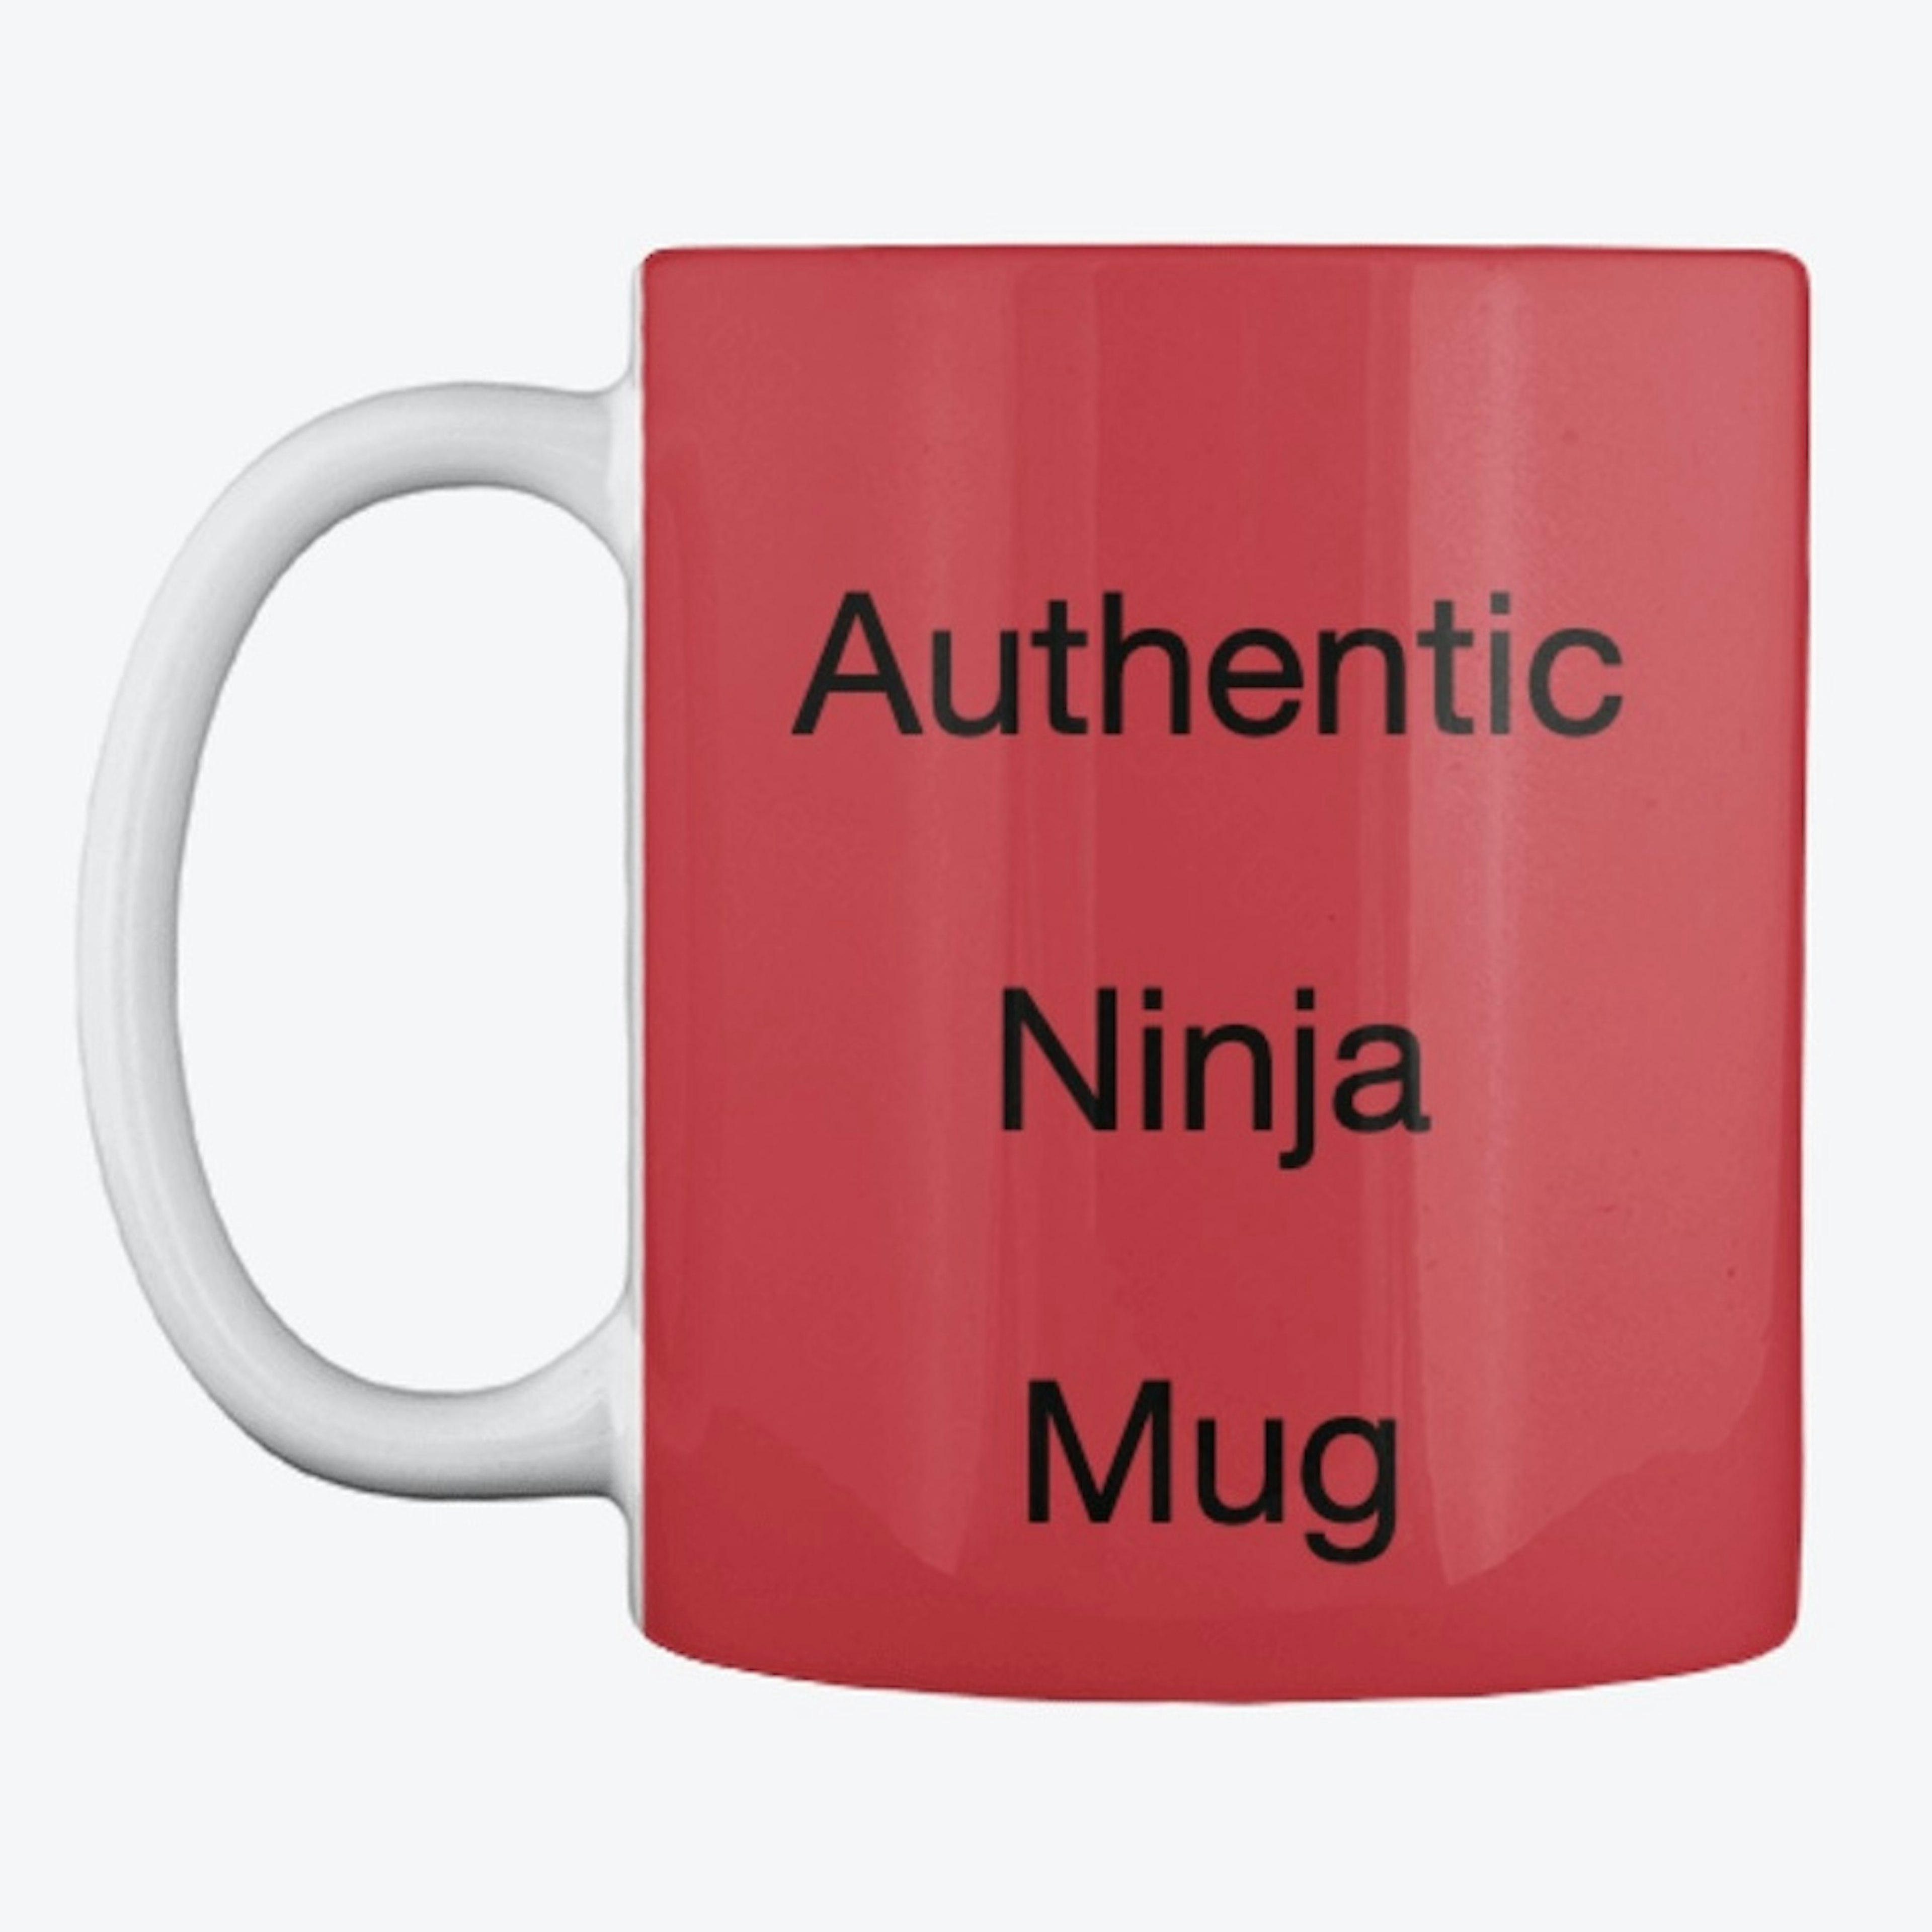 Authentic Ninja Mug